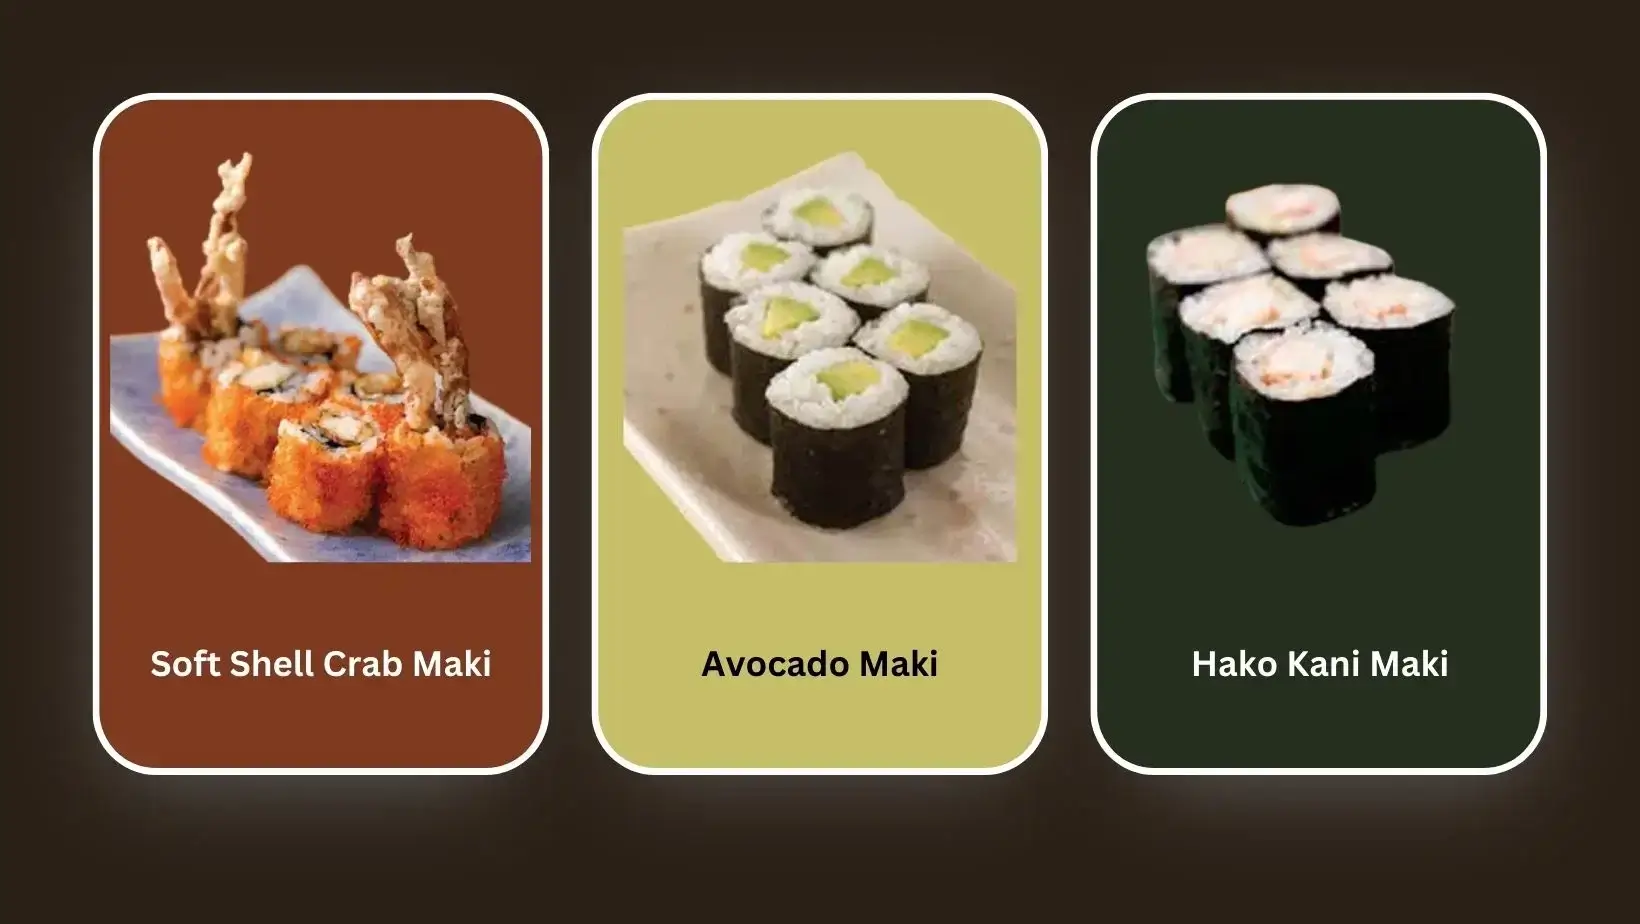 Ikura Sushi, Negitoro Sushi, and Salmon Ikura Sushi